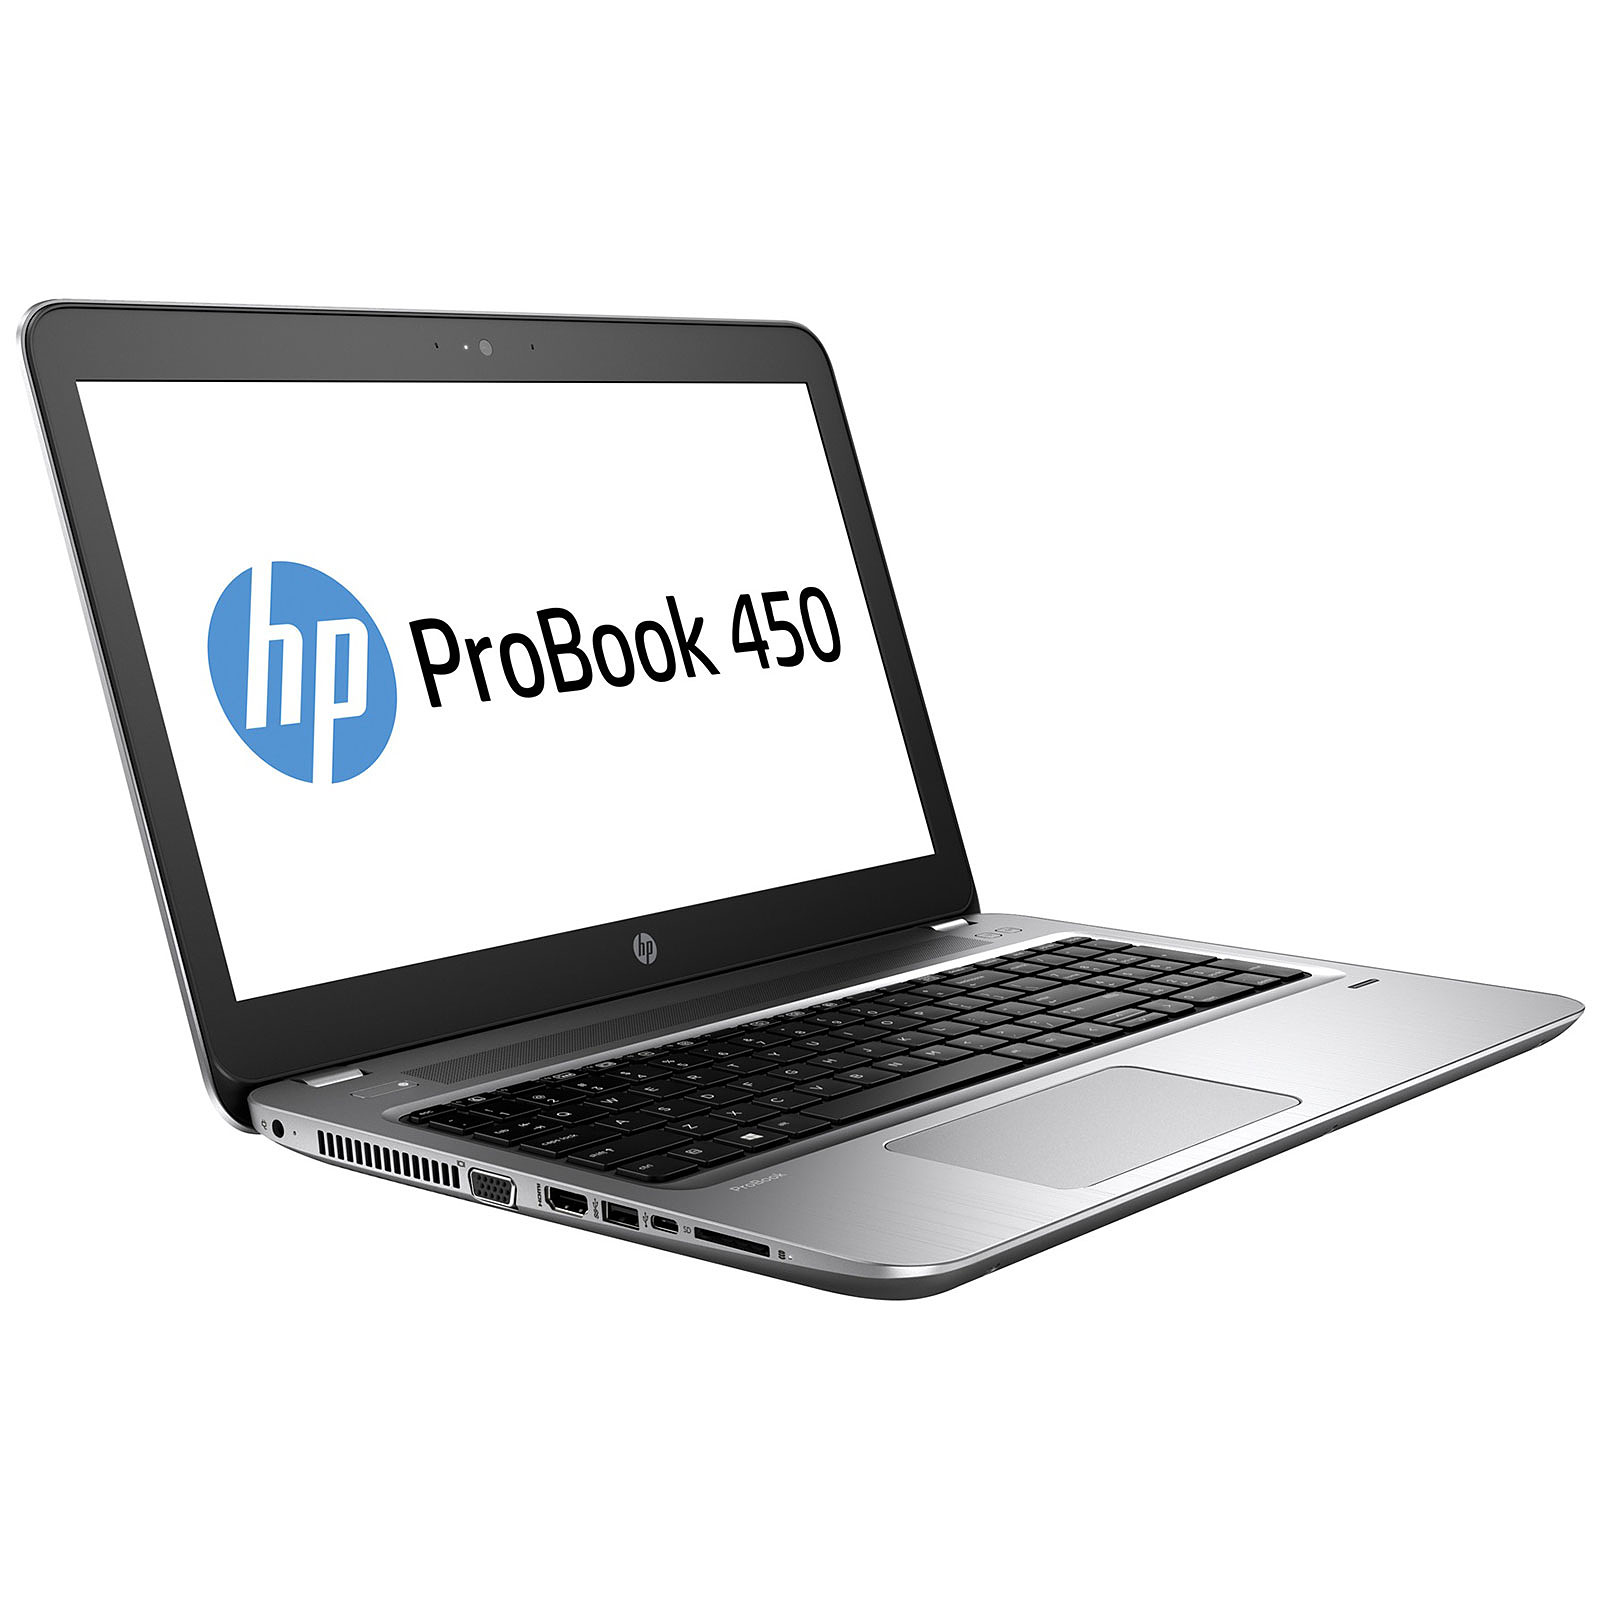 HP Probook 450 G4 Core I5-7200U 2.5 Ghz 8GB 240GB M2 SSD DVD/RW Webcam 15.6" Win 10 Pro - H1104221S